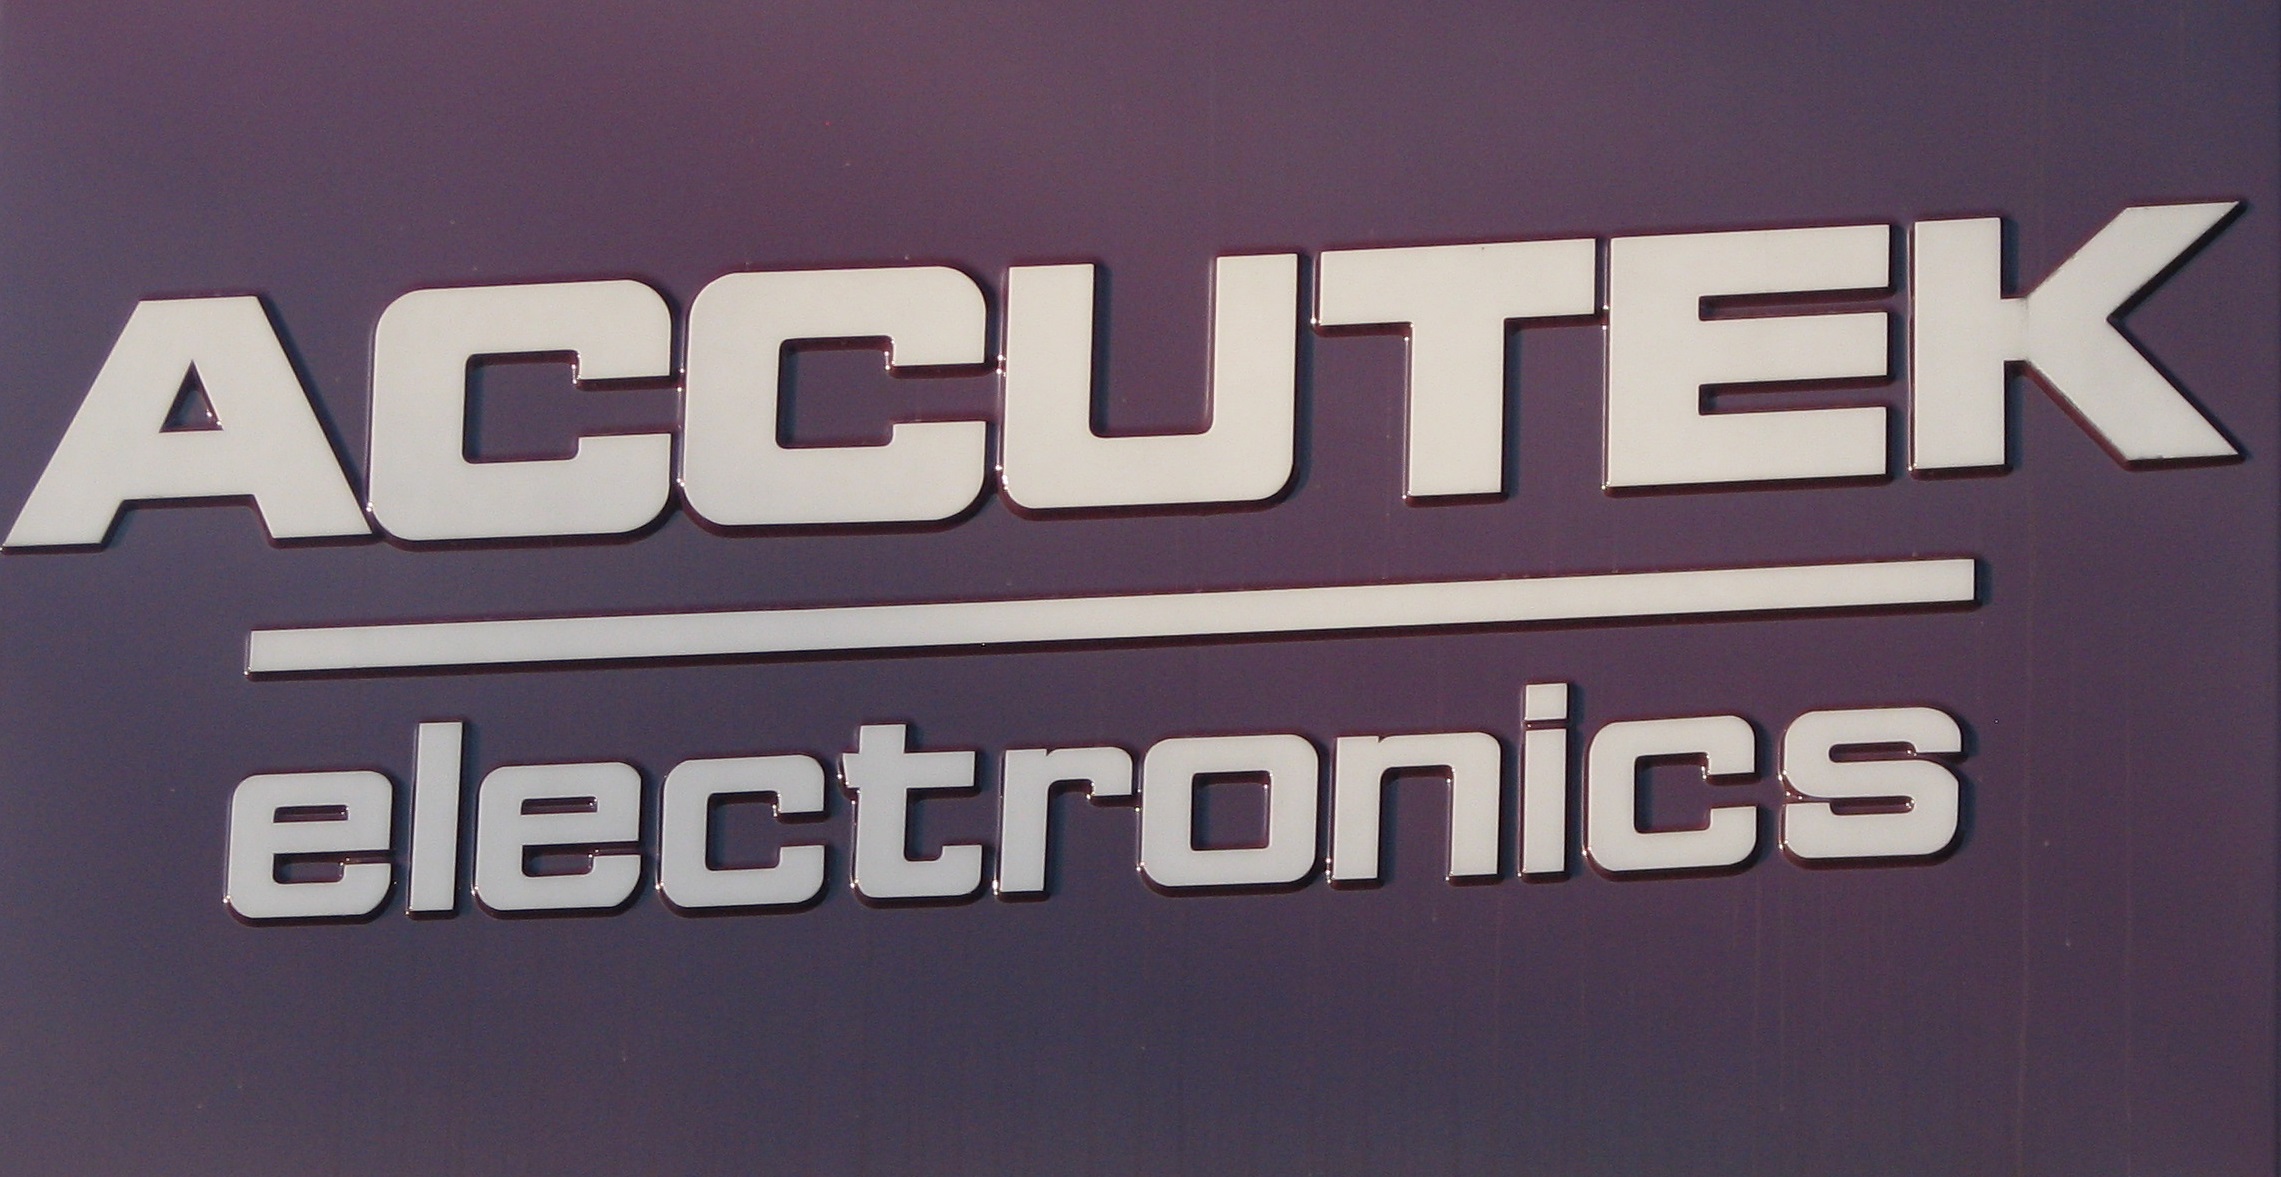 Accutek Electronics Merrillville homepage logo